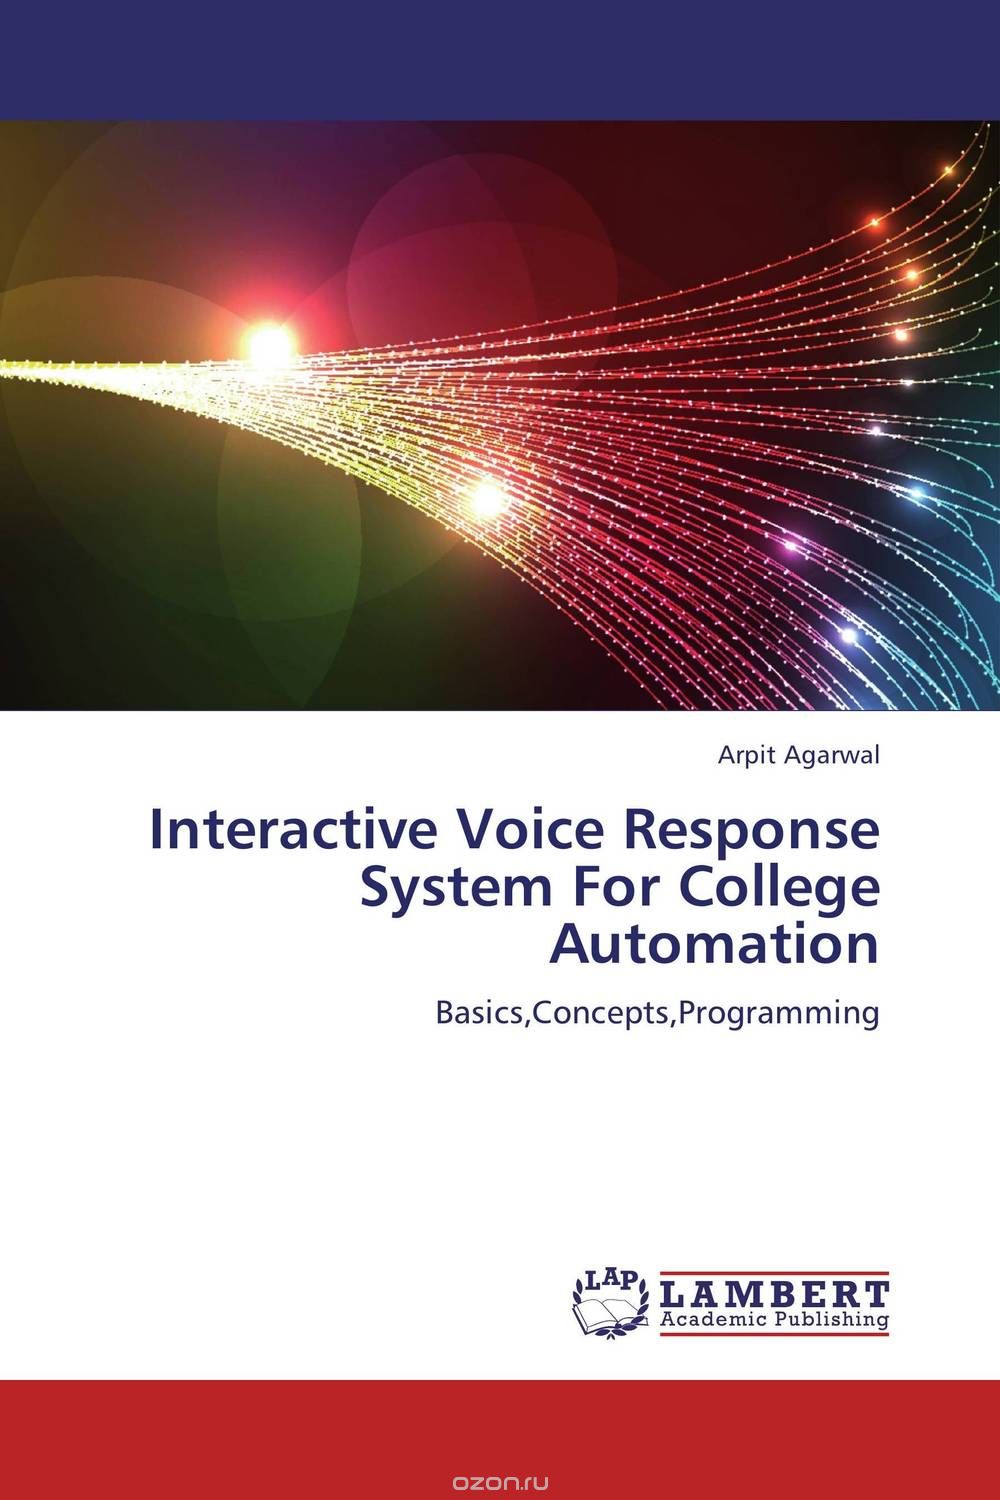 Скачать книгу "Interactive Voice Response System For College Automation"